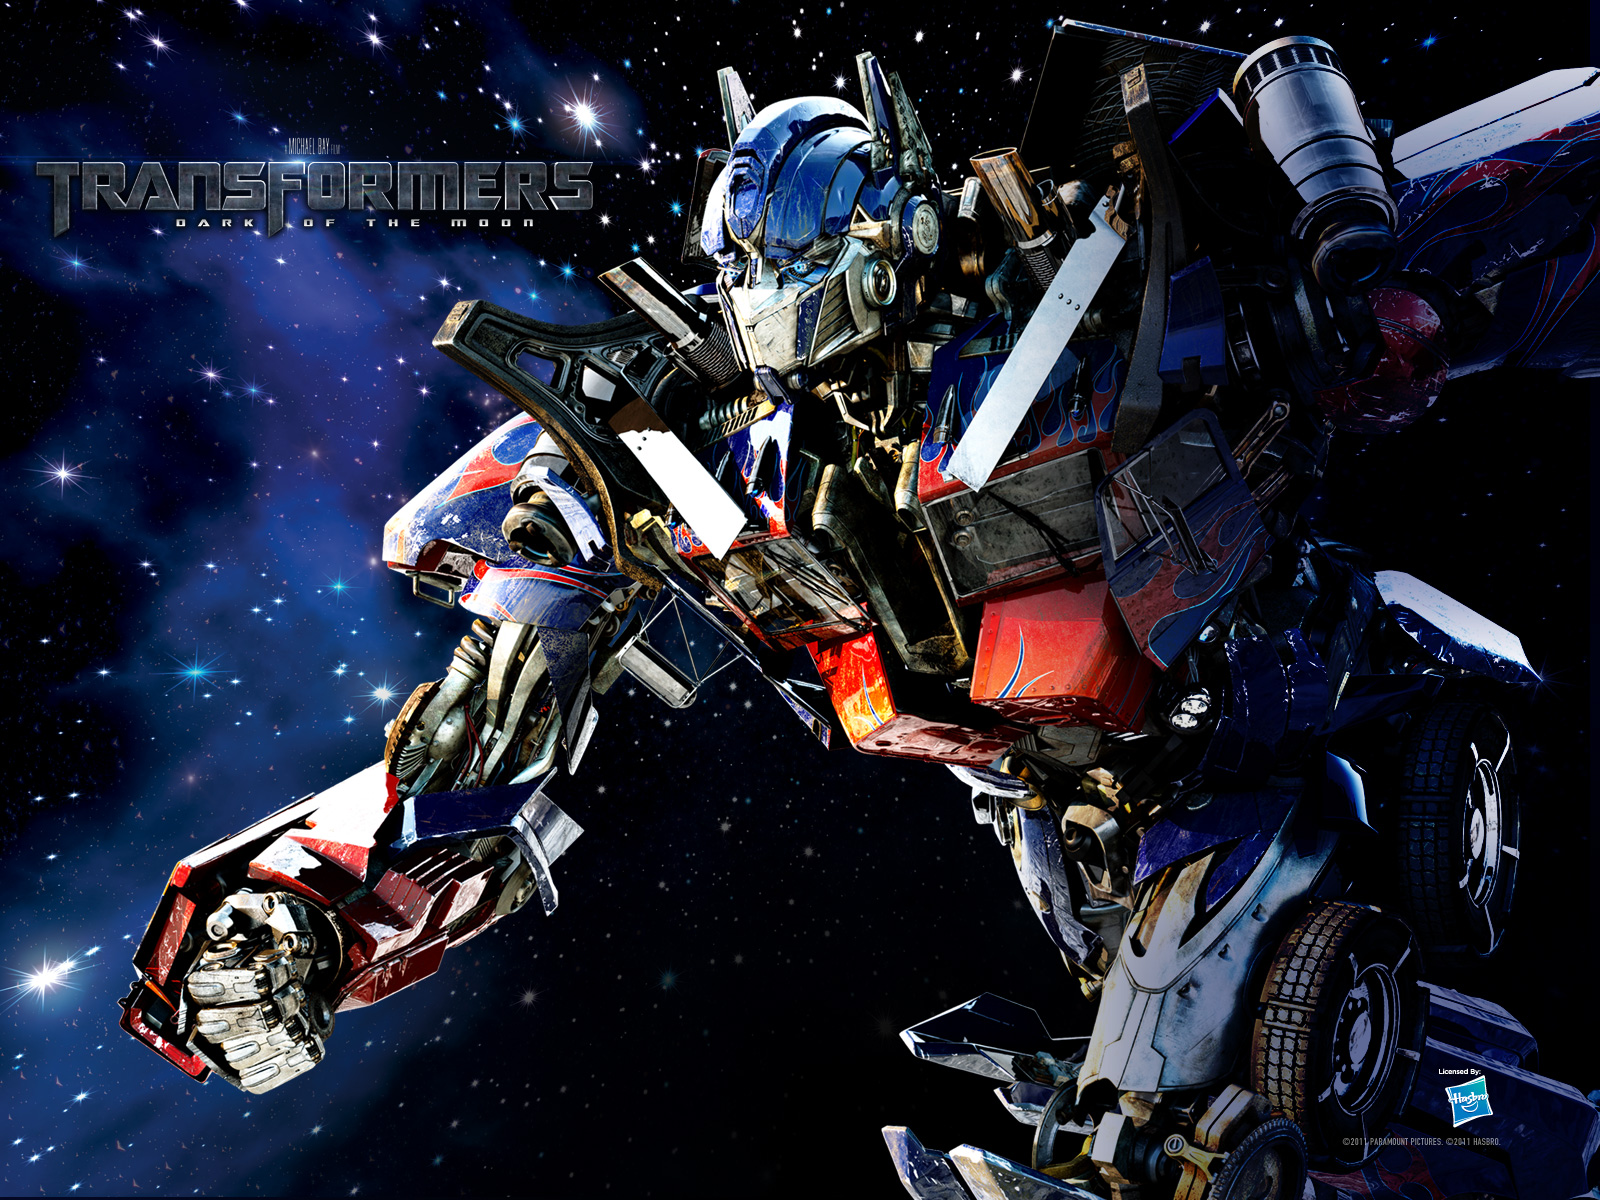  Transformers Movie Dark of the Moon exclusive desktop wallpaper by